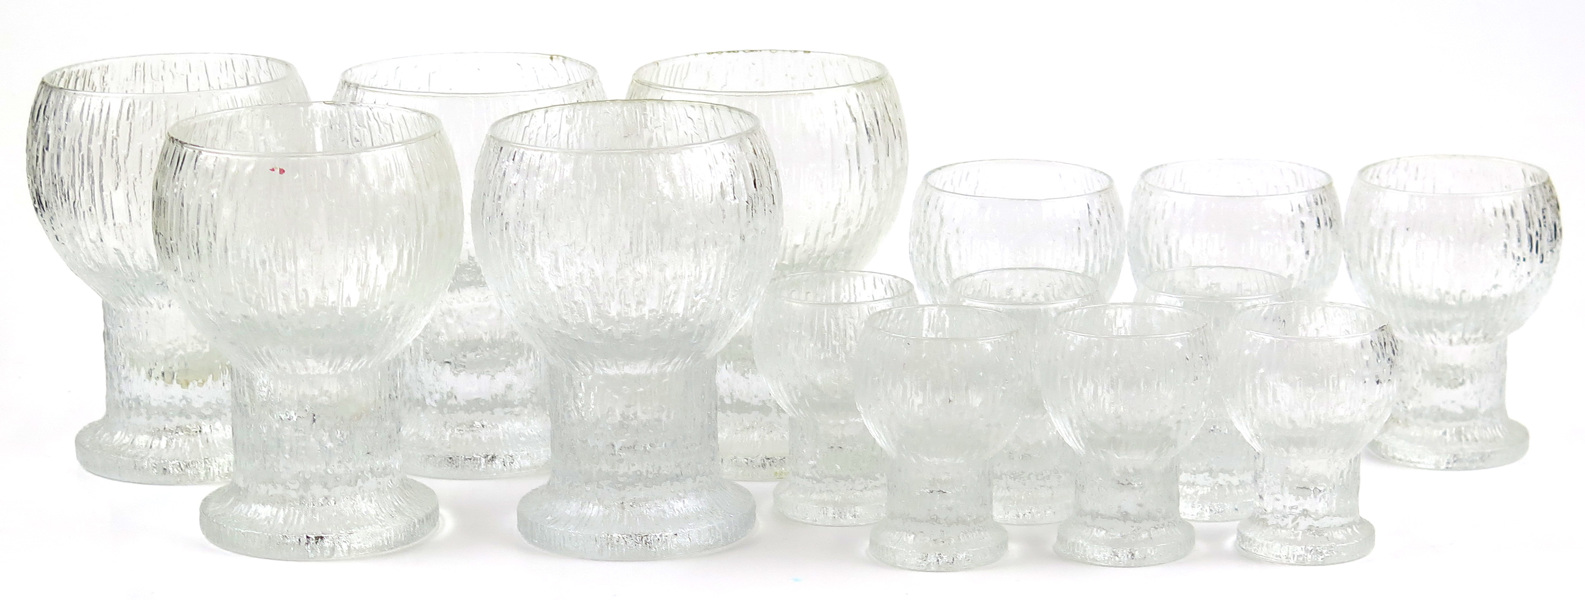 Sarpaneva, Timo för Iittala, ölglas, 5 st, snapsglas, 6 st samt likörglas, 3 st, Kekkerit design 1970, _4734a_8d890a52fb50de6_lg.jpeg